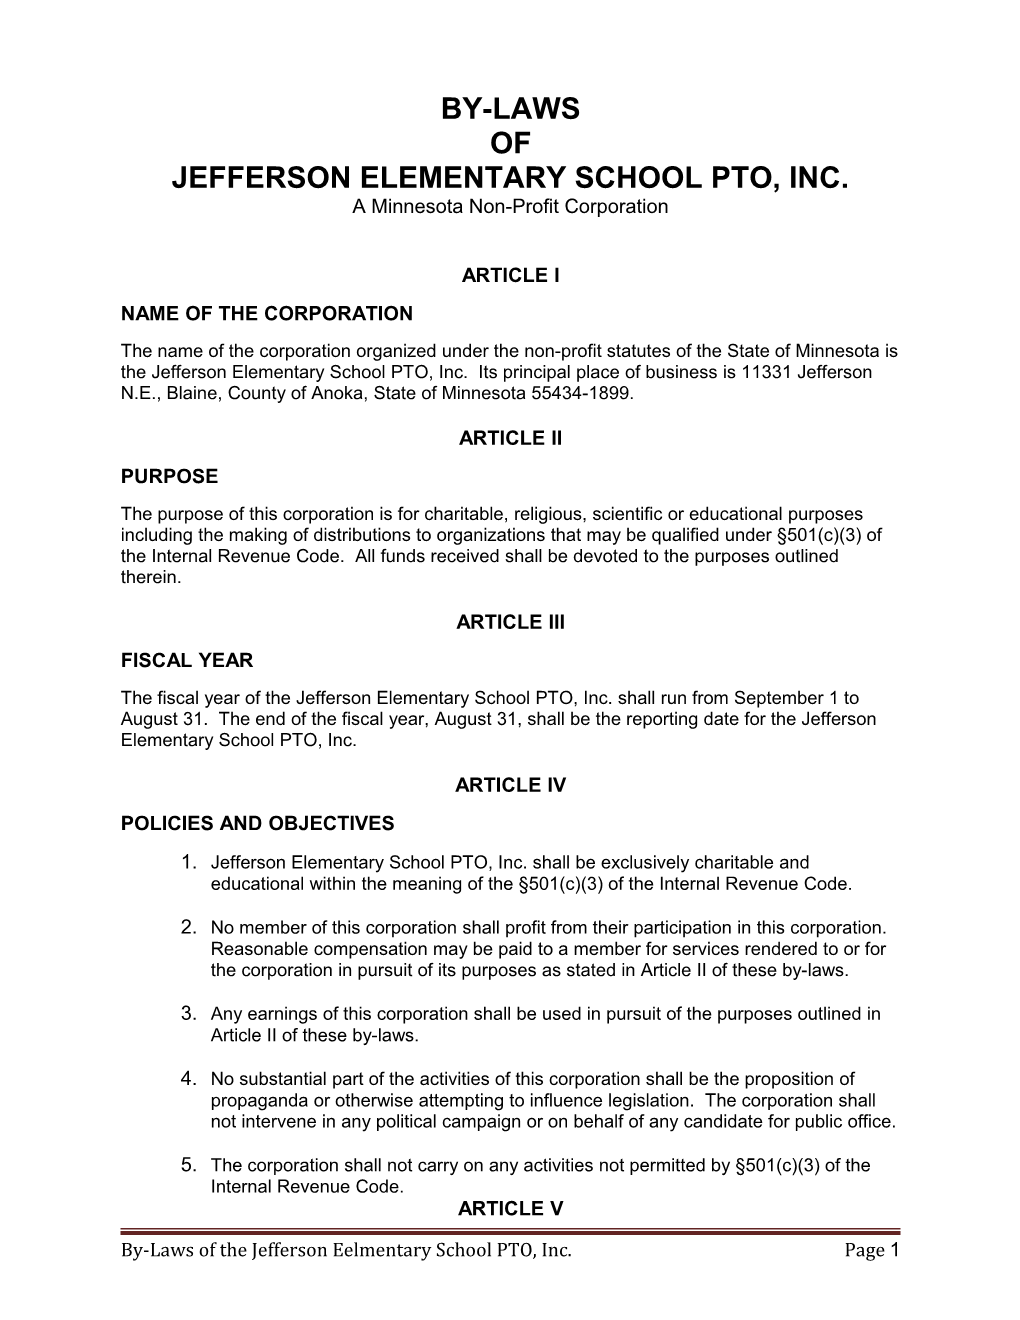 Jefferson Elementary School Pto, Inc